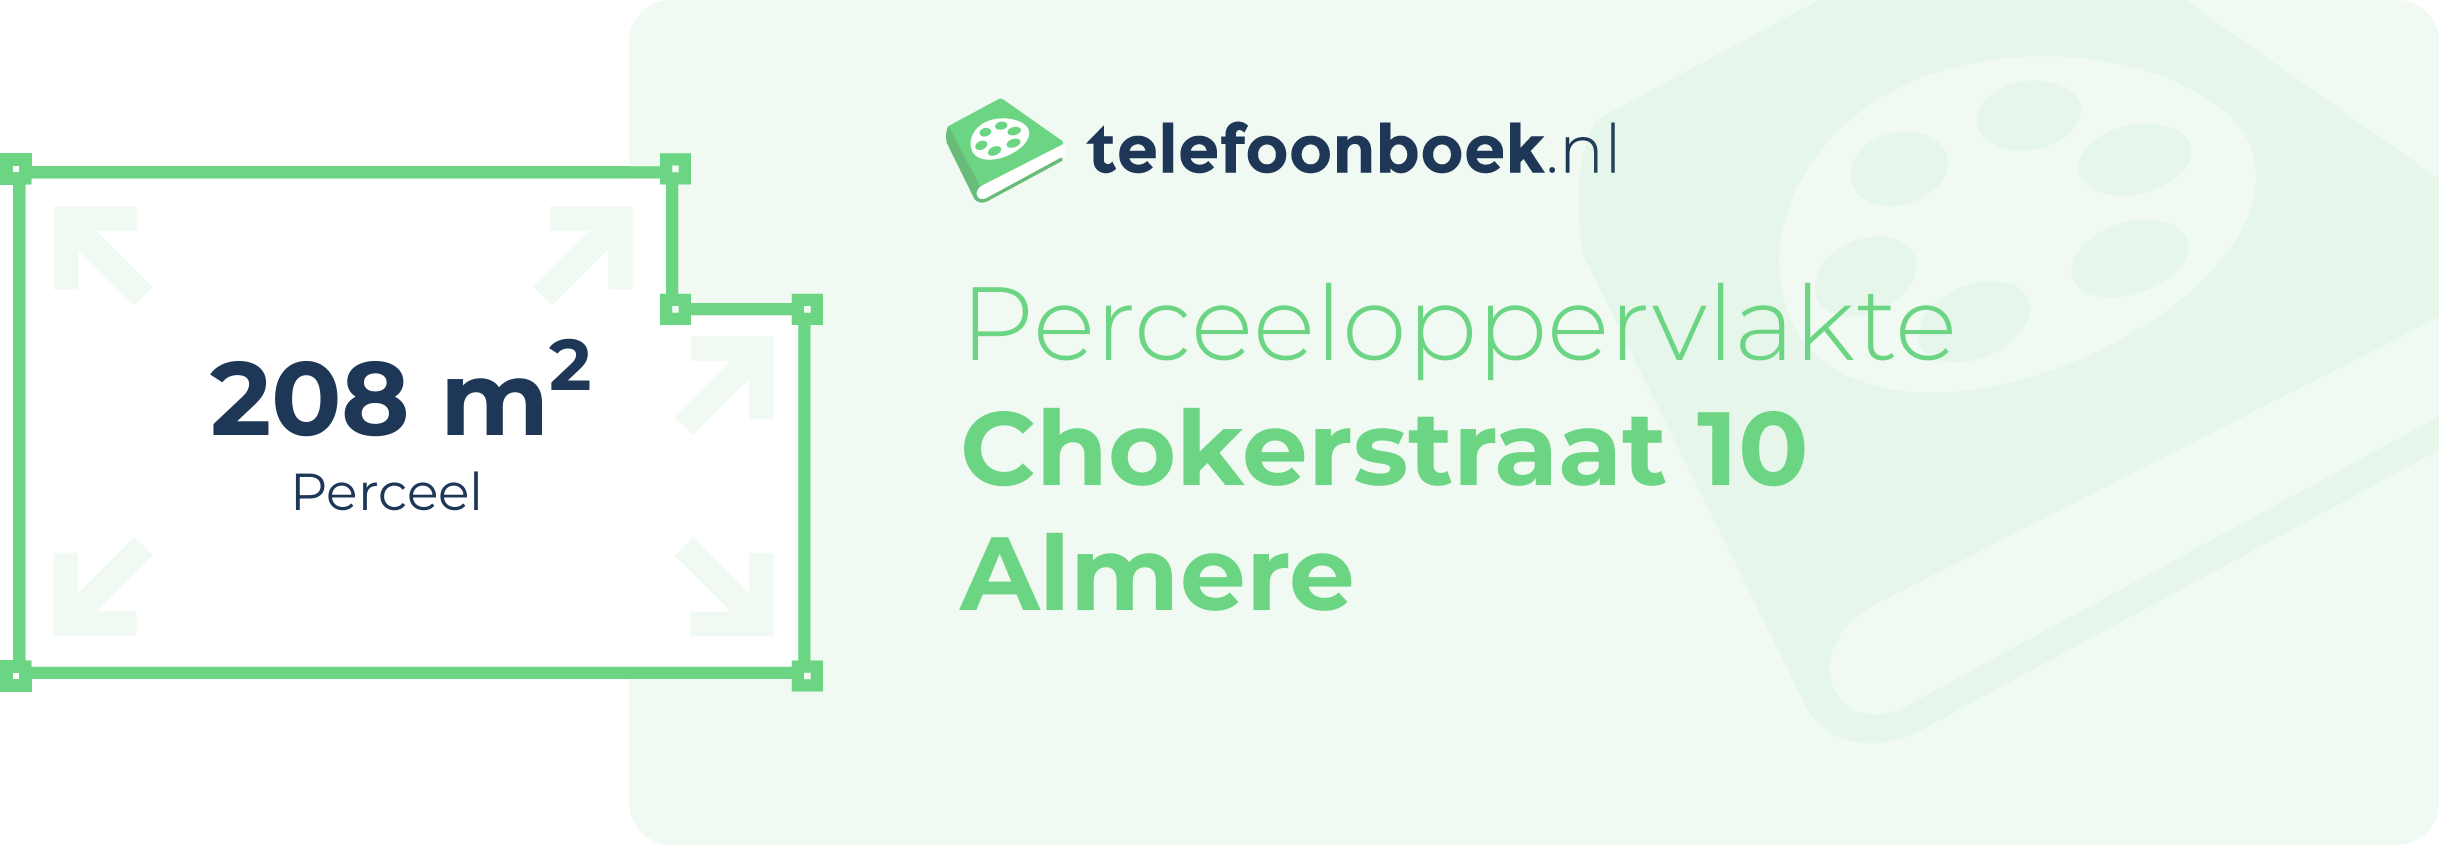 Perceeloppervlakte Chokerstraat 10 Almere